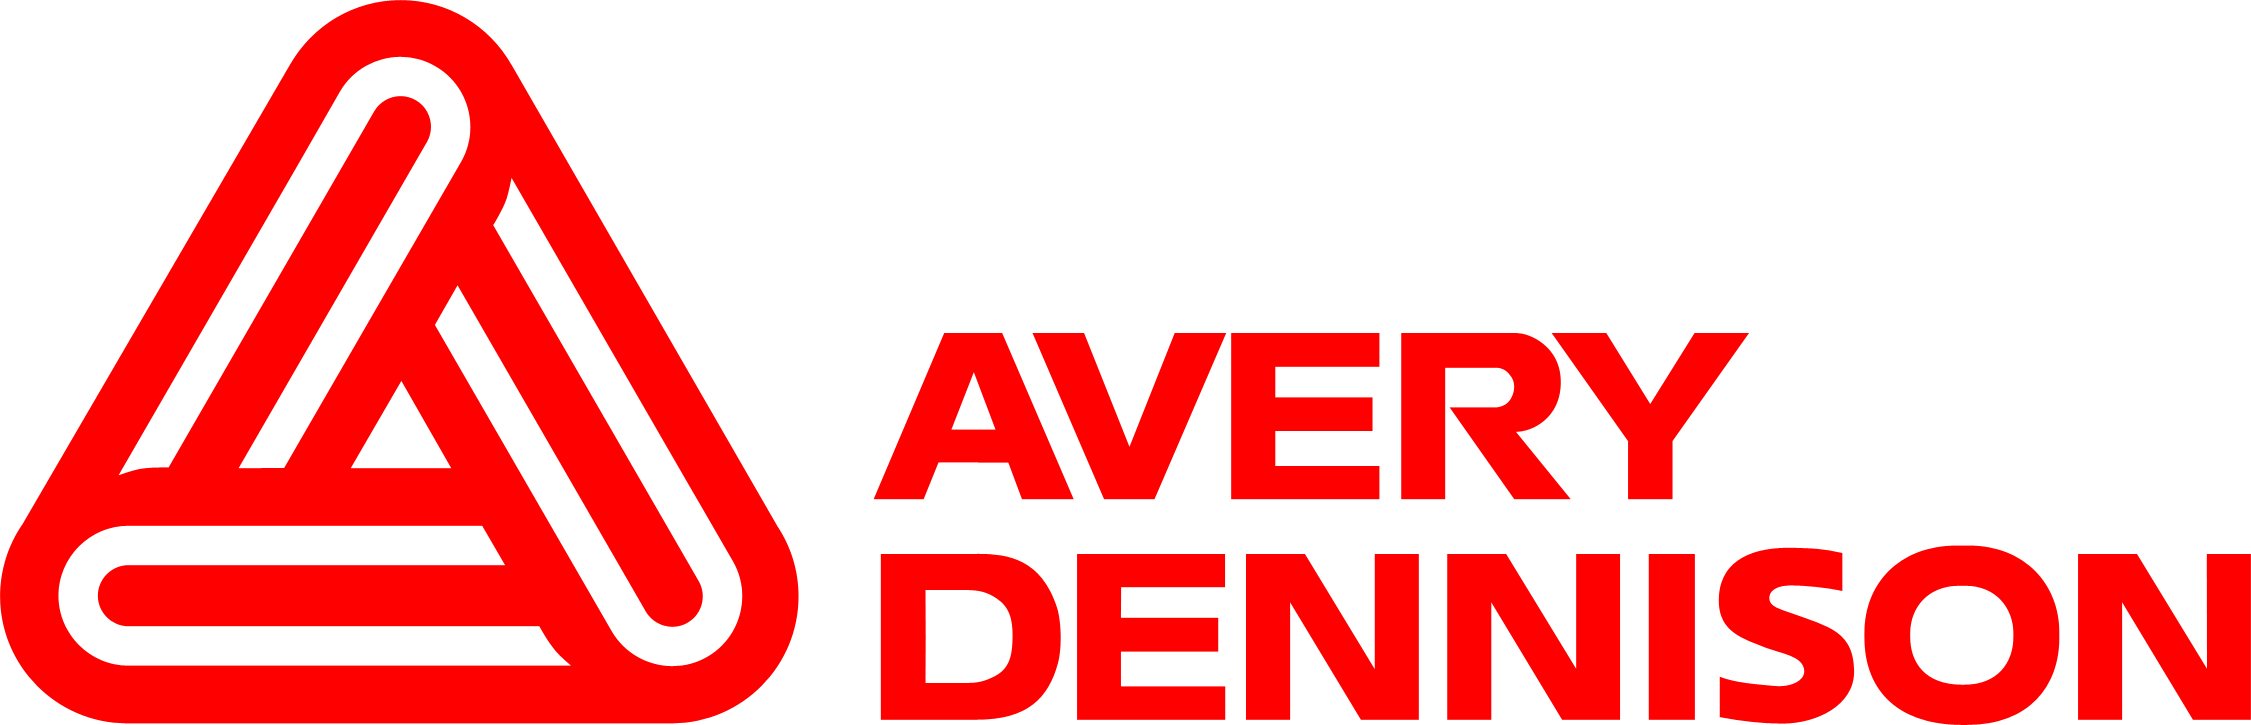 Avery Dennison logo negative 